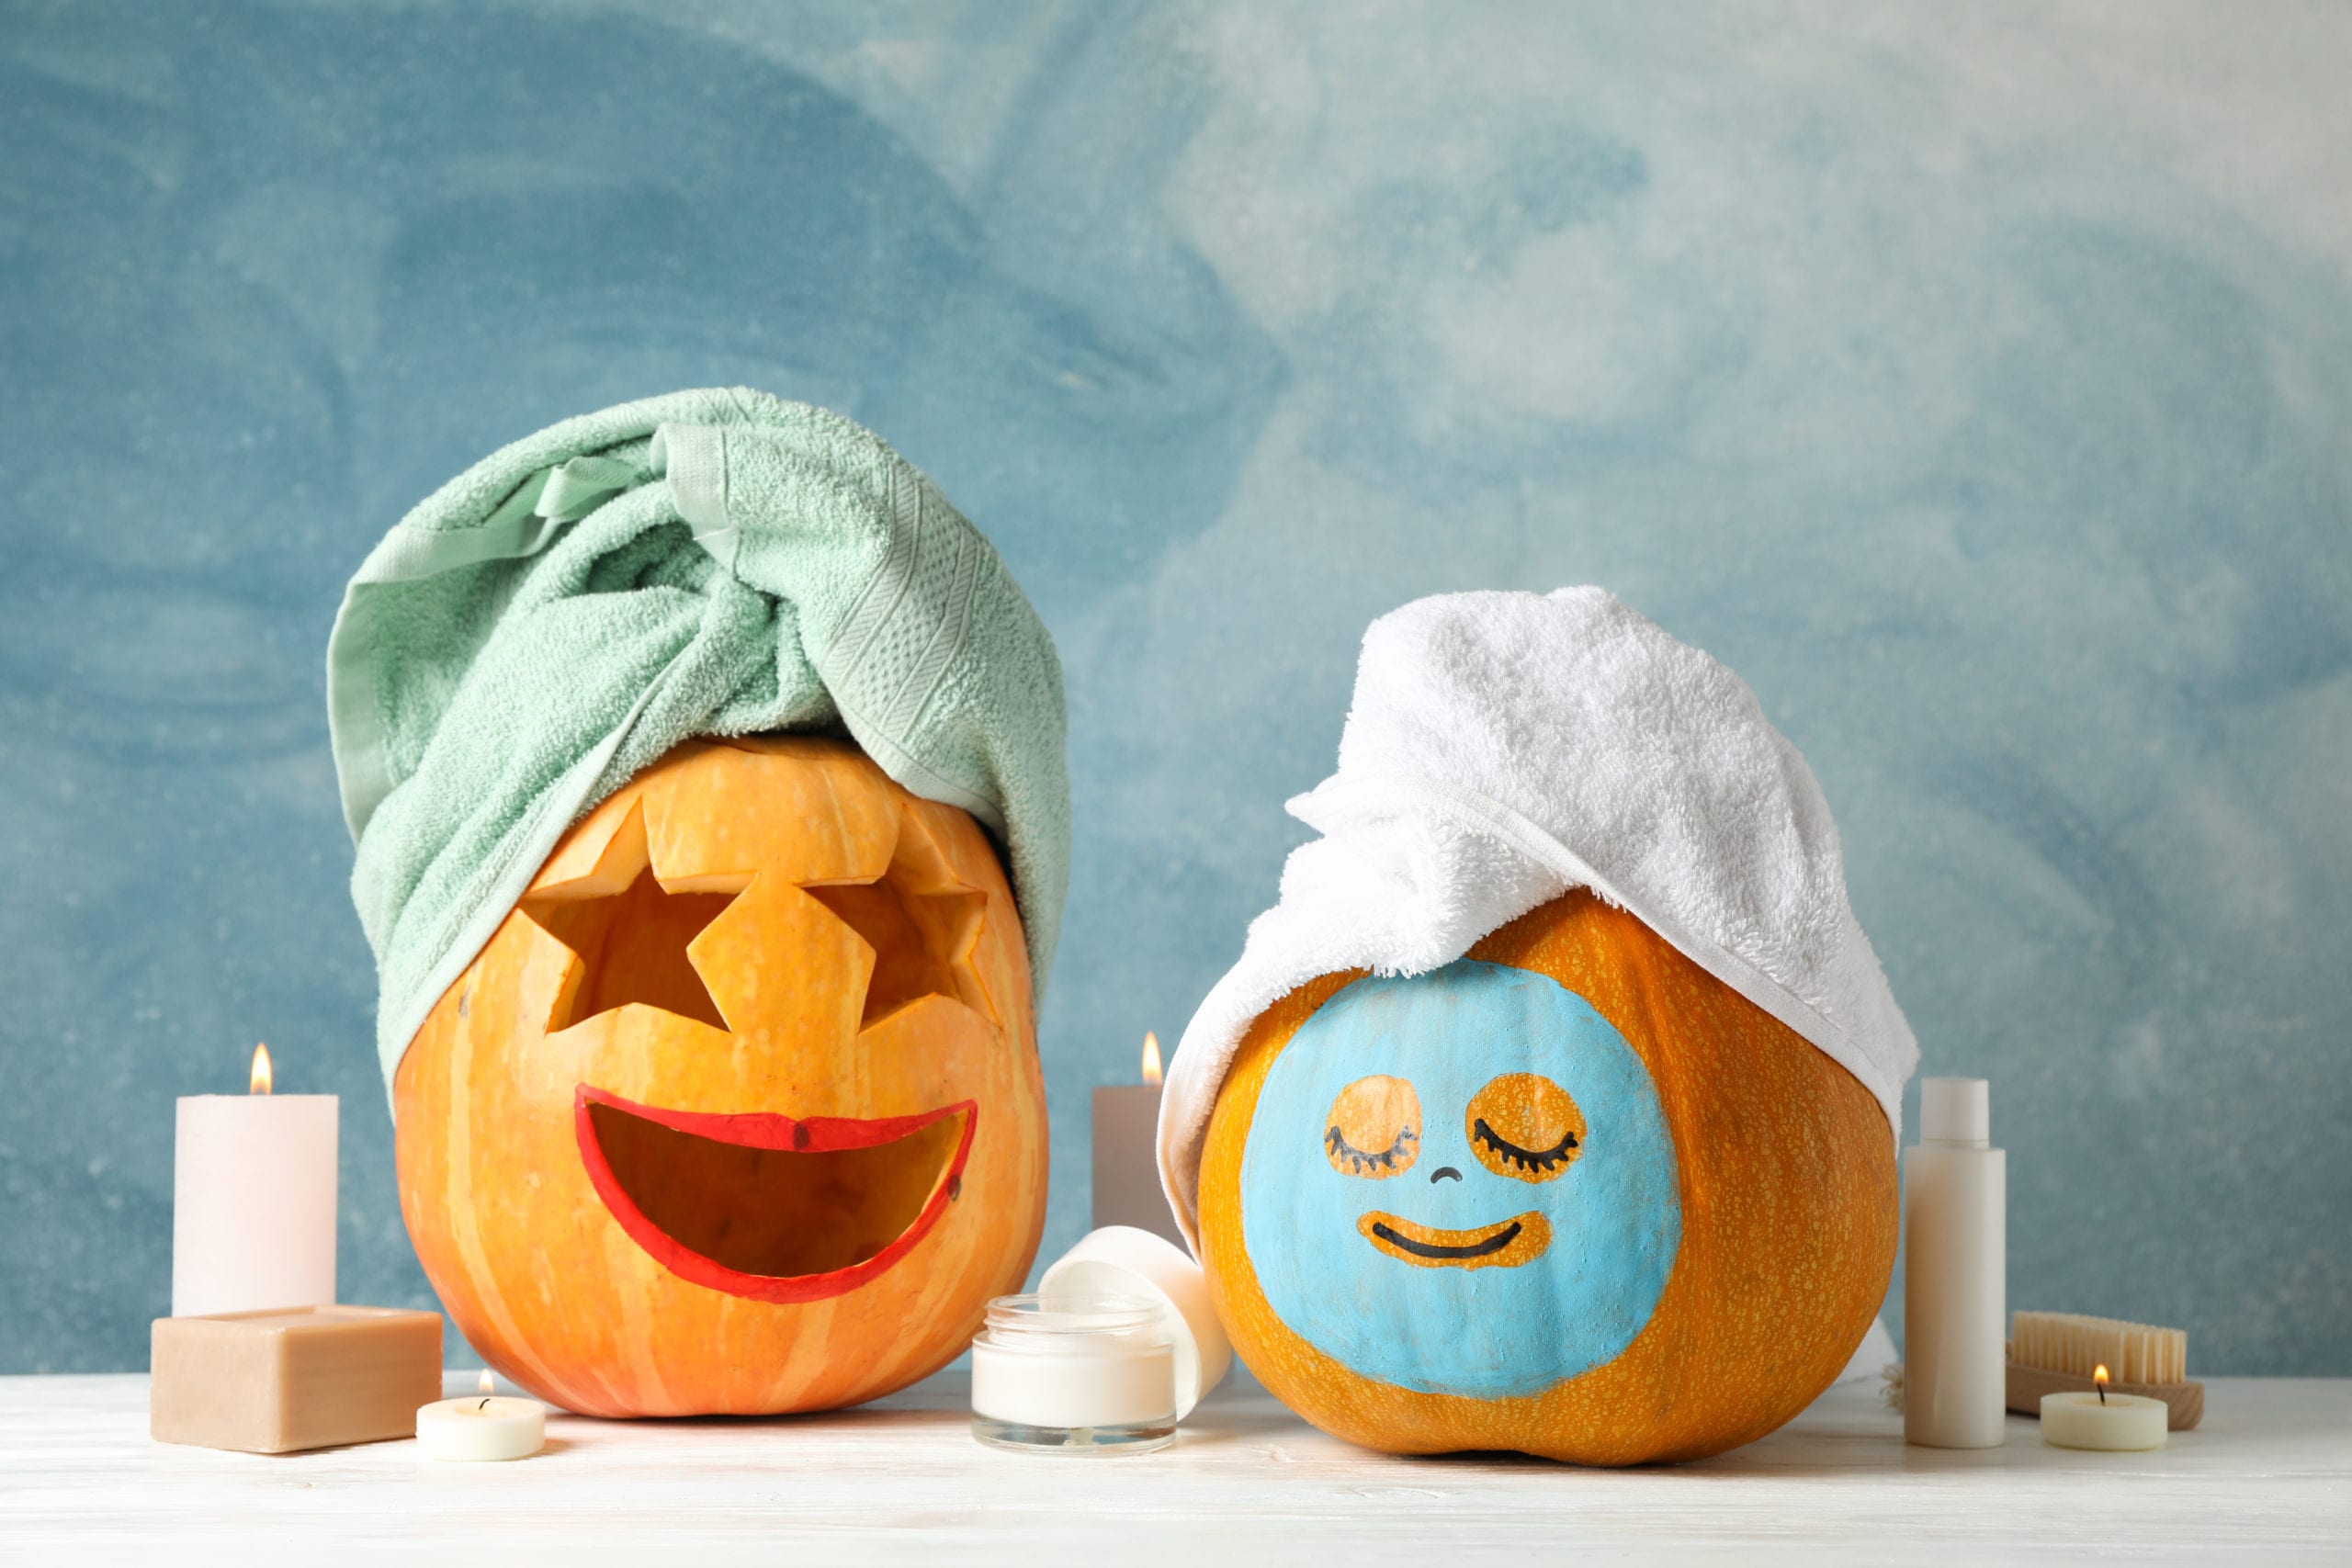 General 2560x1707 Halloween humor candles spa pumpkin still life towel digital art